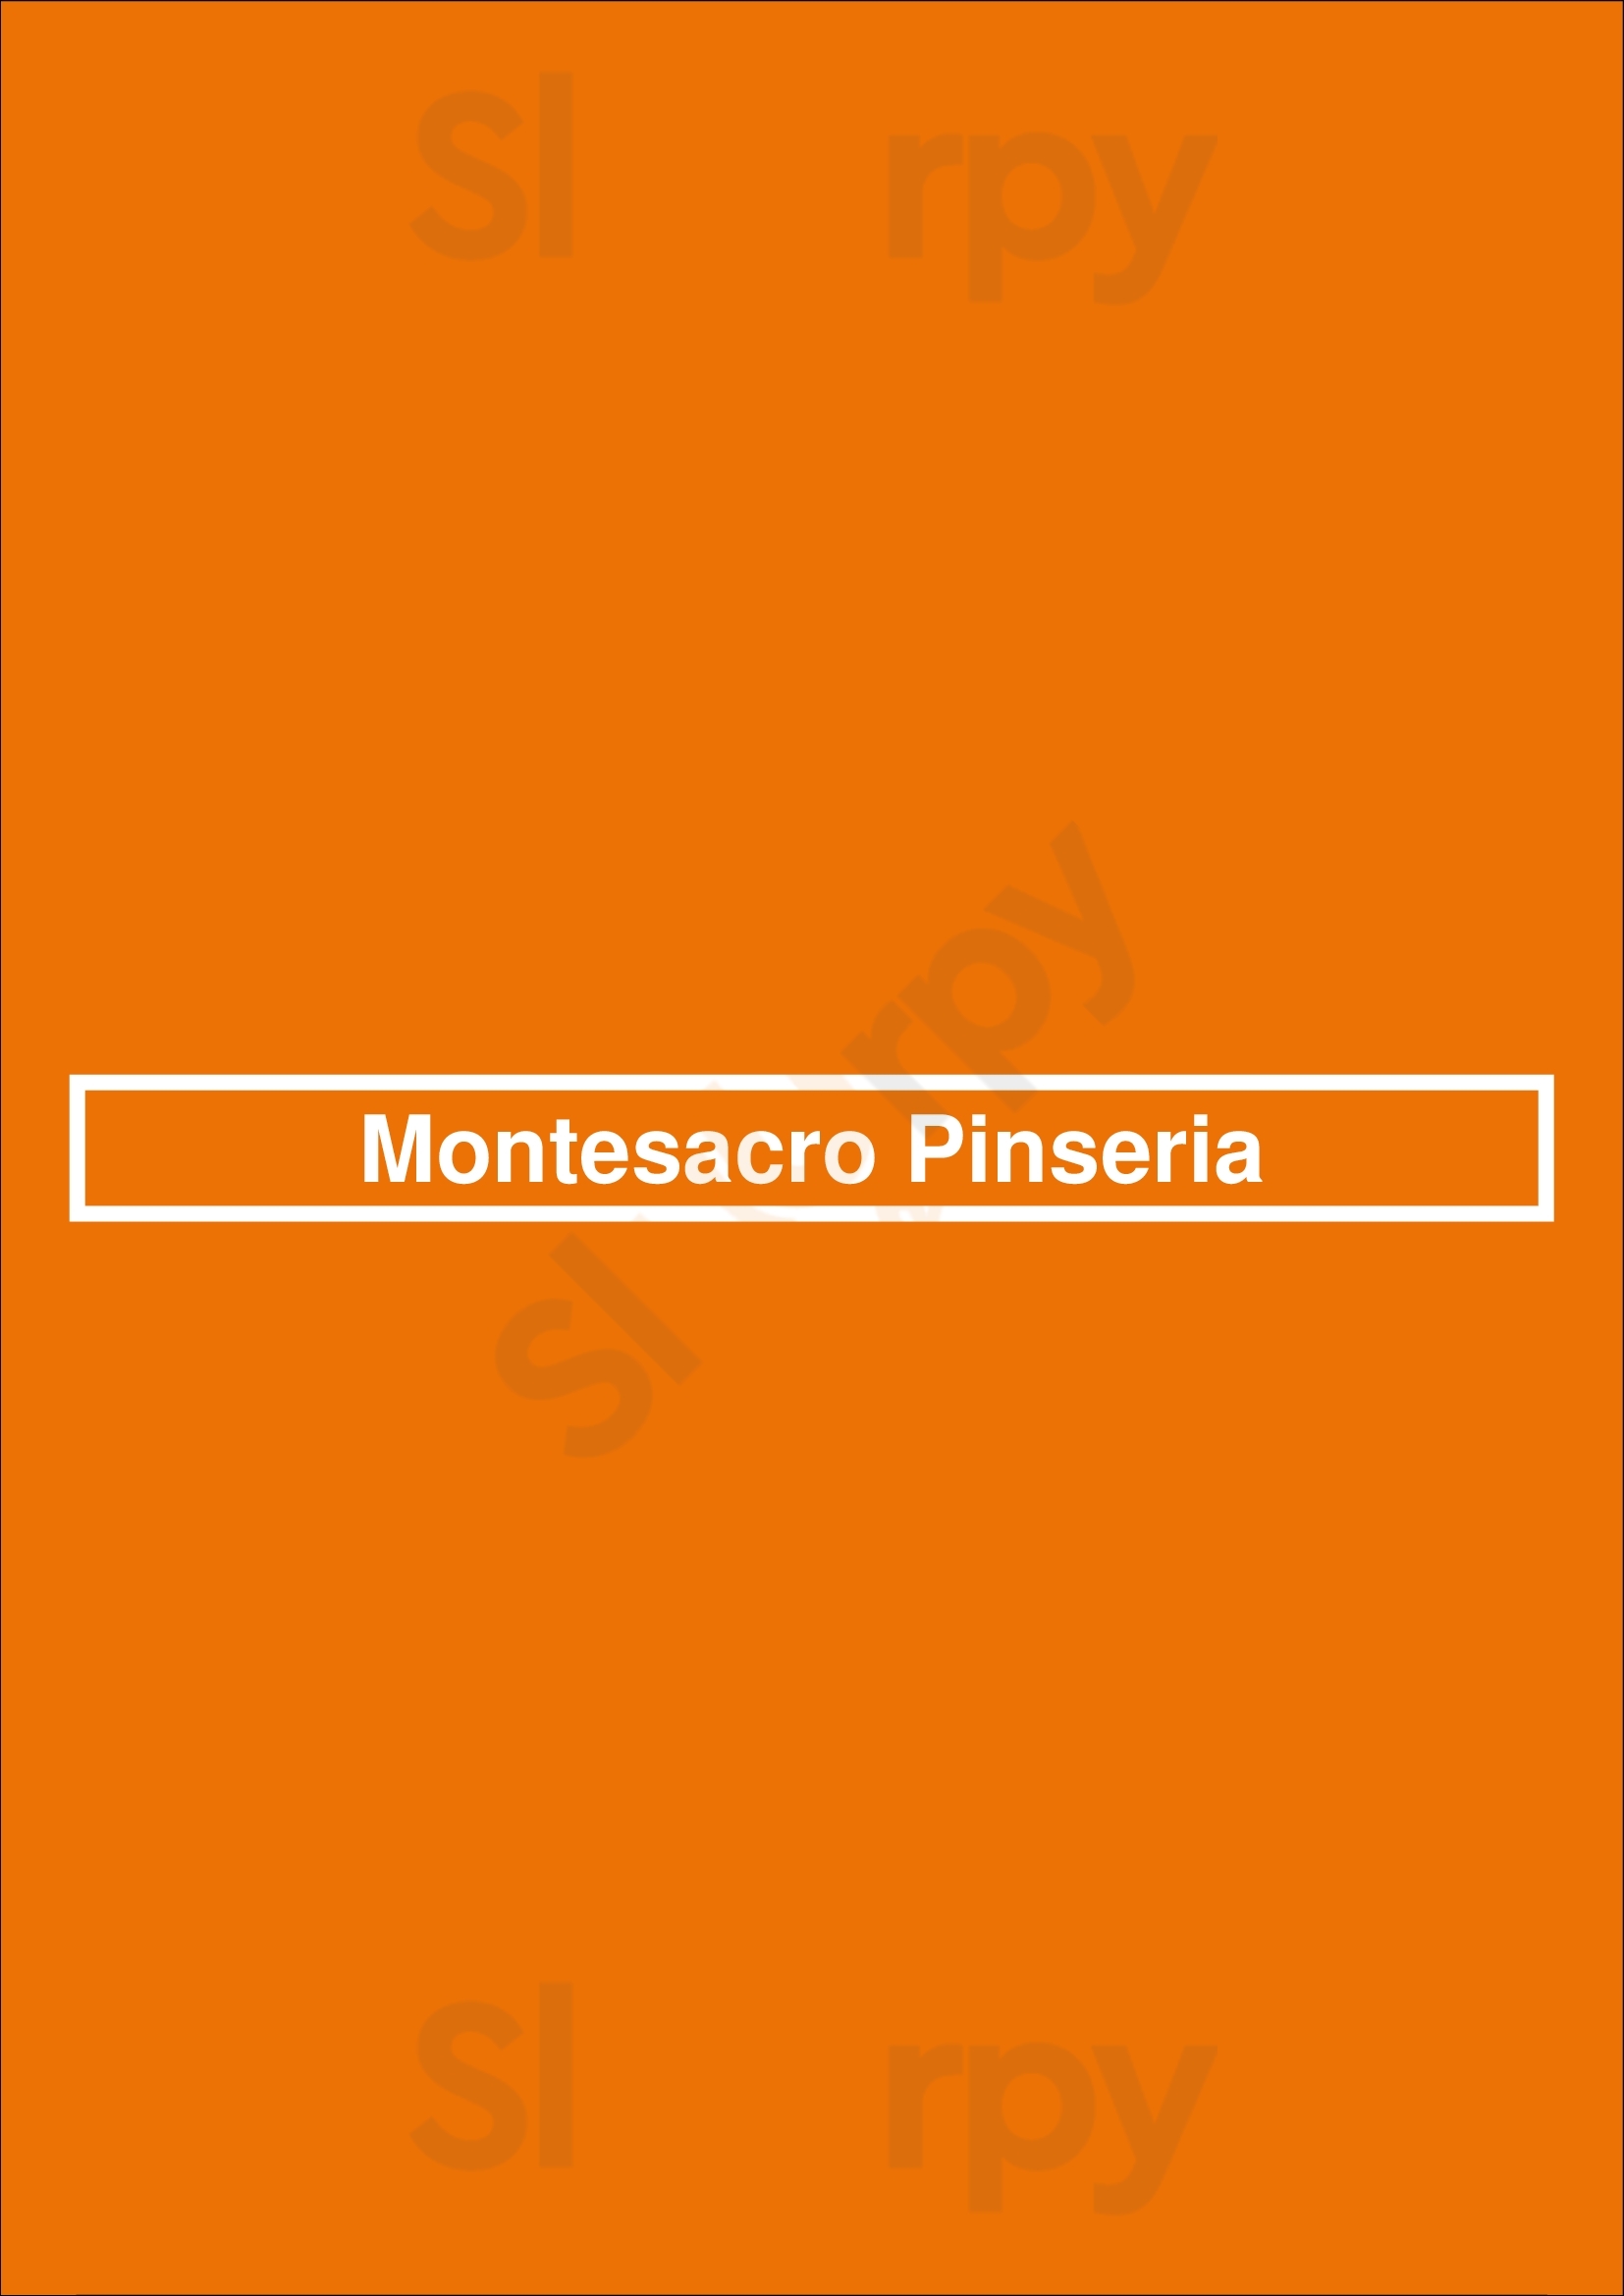 Montesacro Pinseria San Francisco Menu - 1